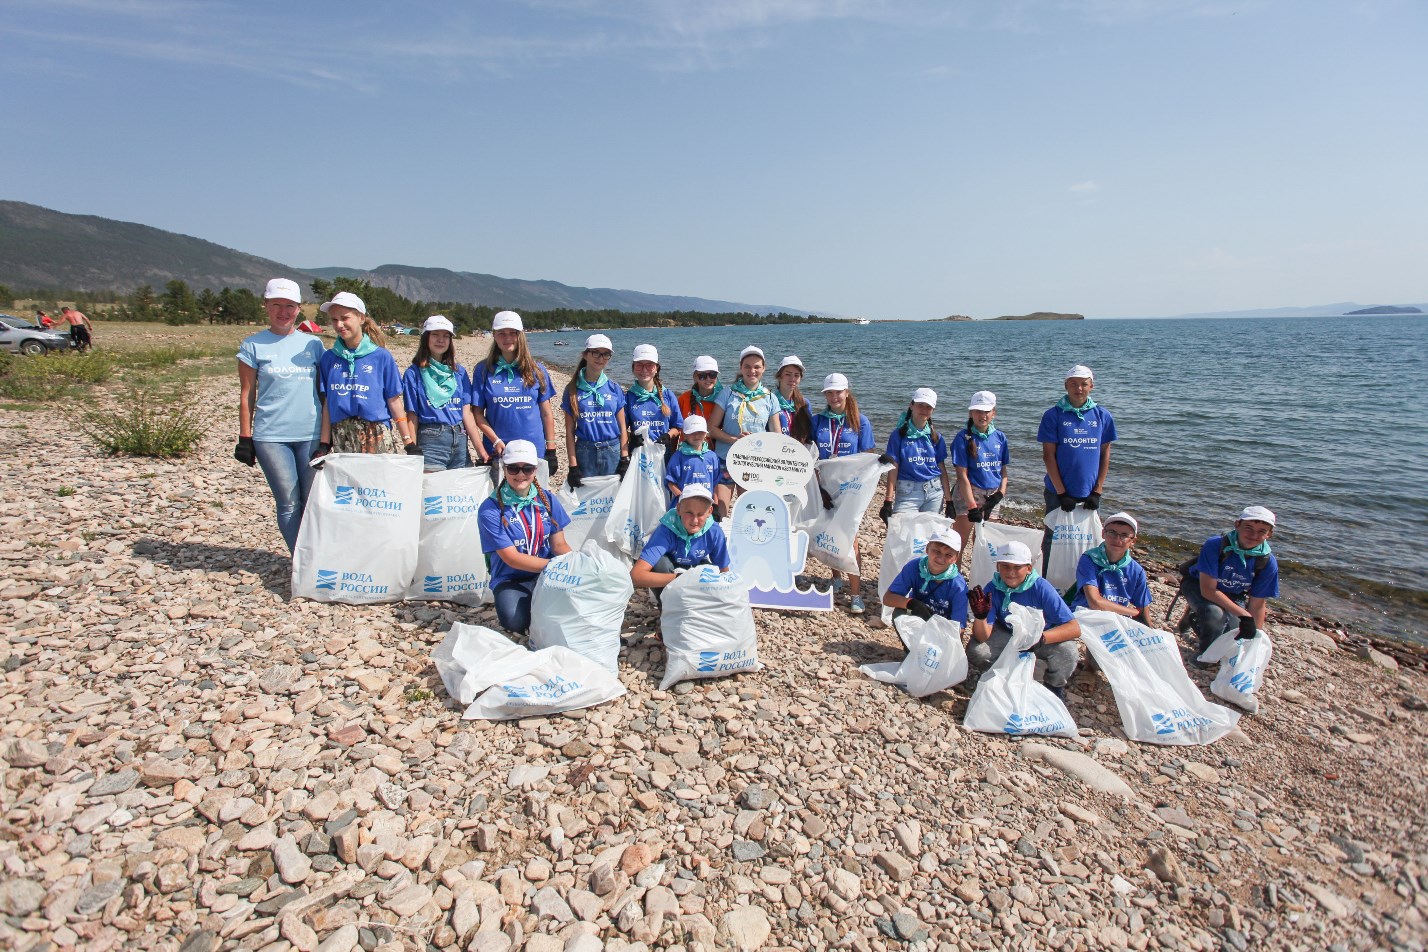 День чистого берега. Волонтеры на Байкале. Экология Байкала. Уборка мусора на Байкале. Уборка мусора на Байкале волонтерами.